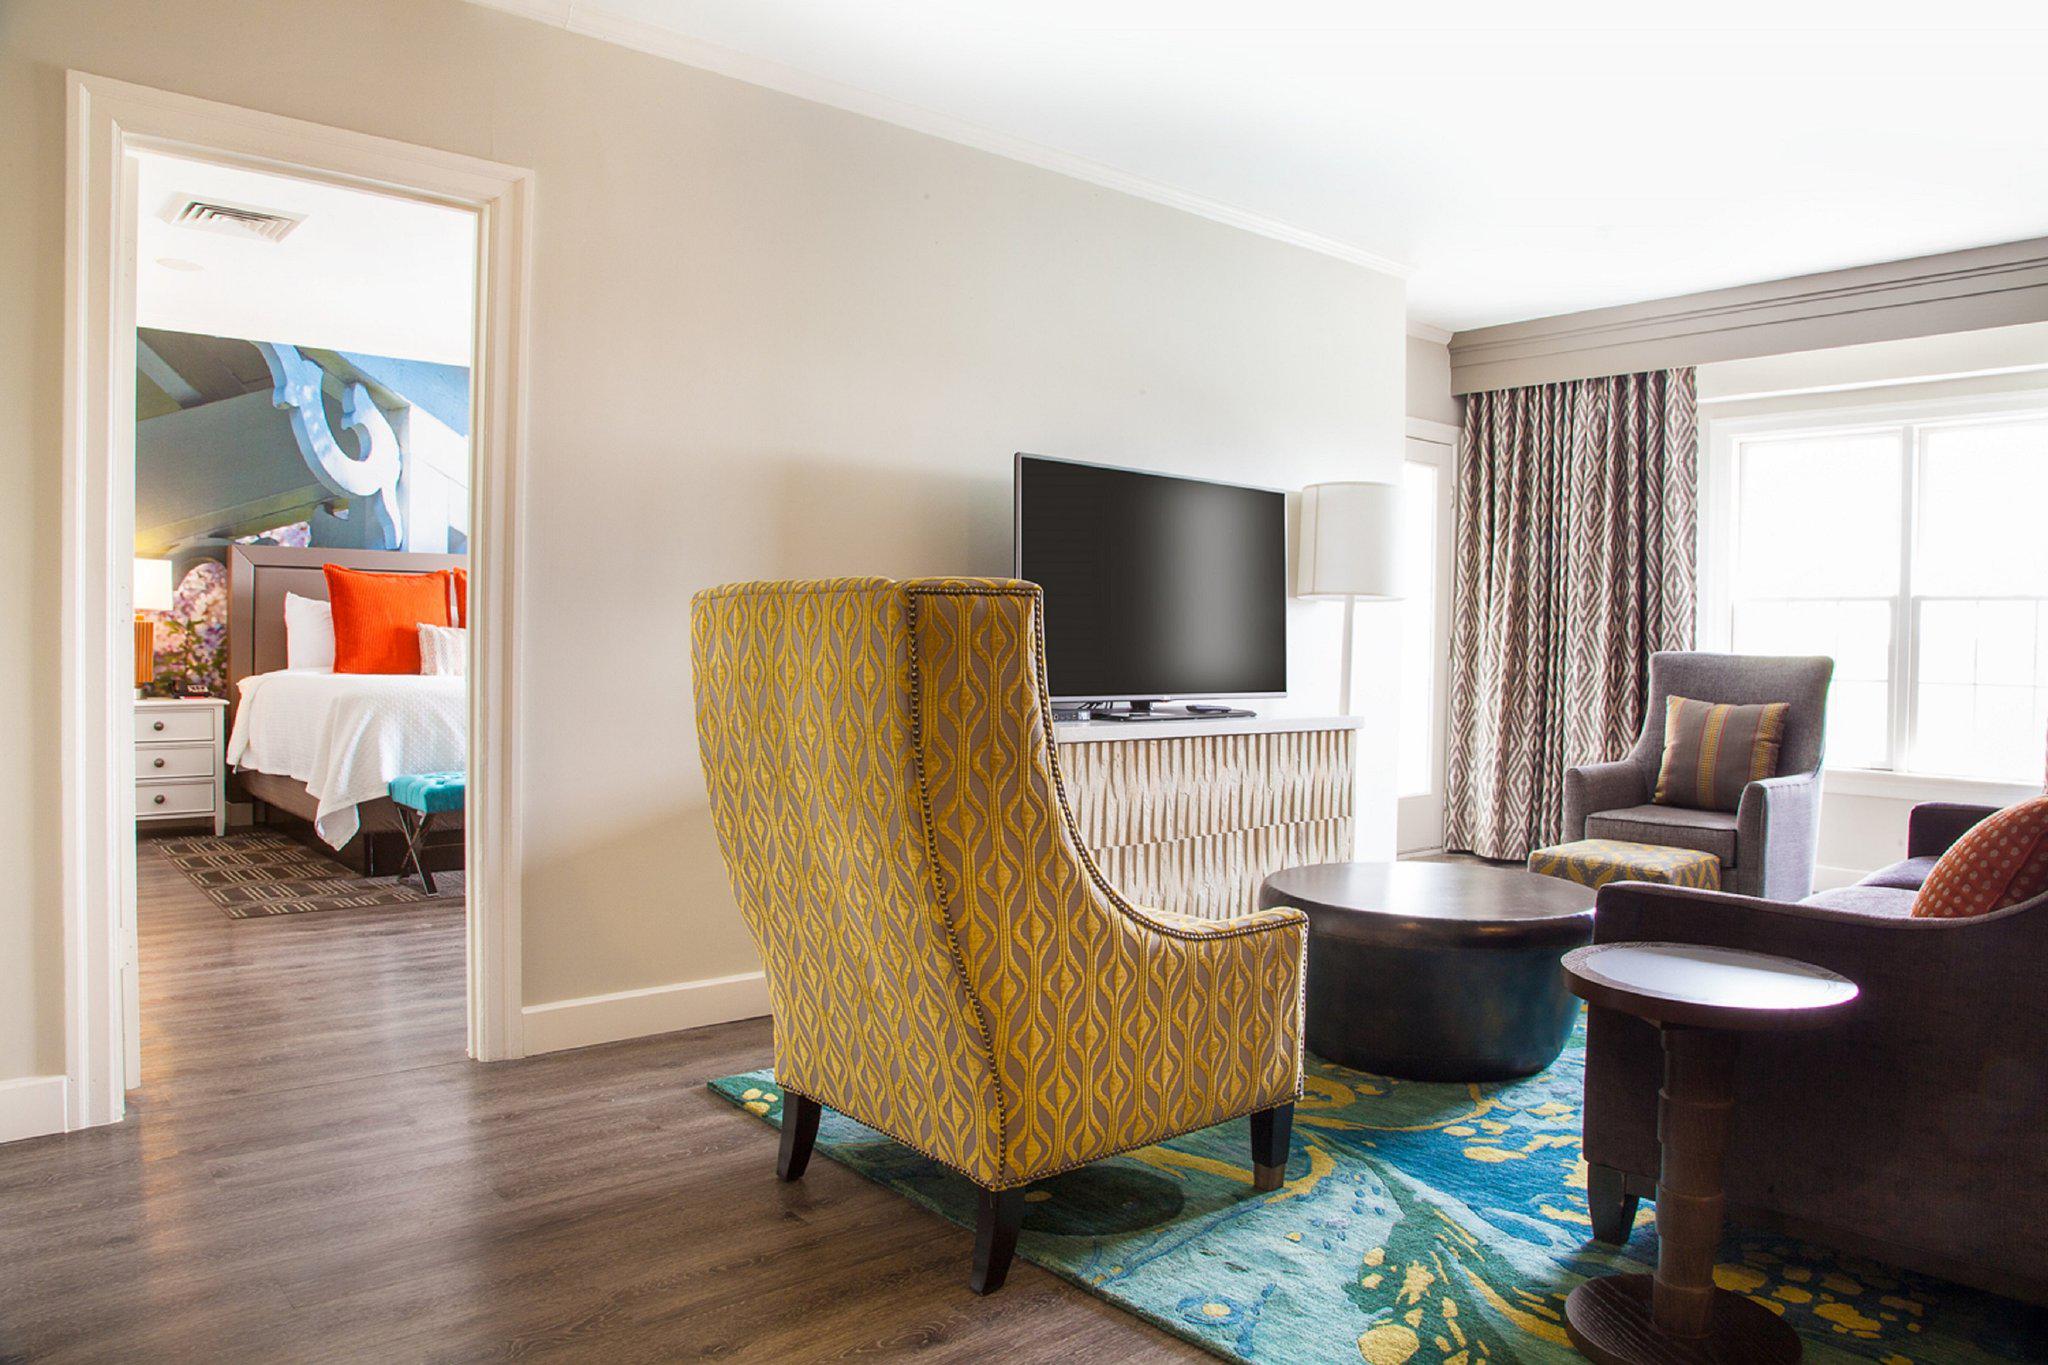 Hotel Indigo Atlanta - Vinings Photo